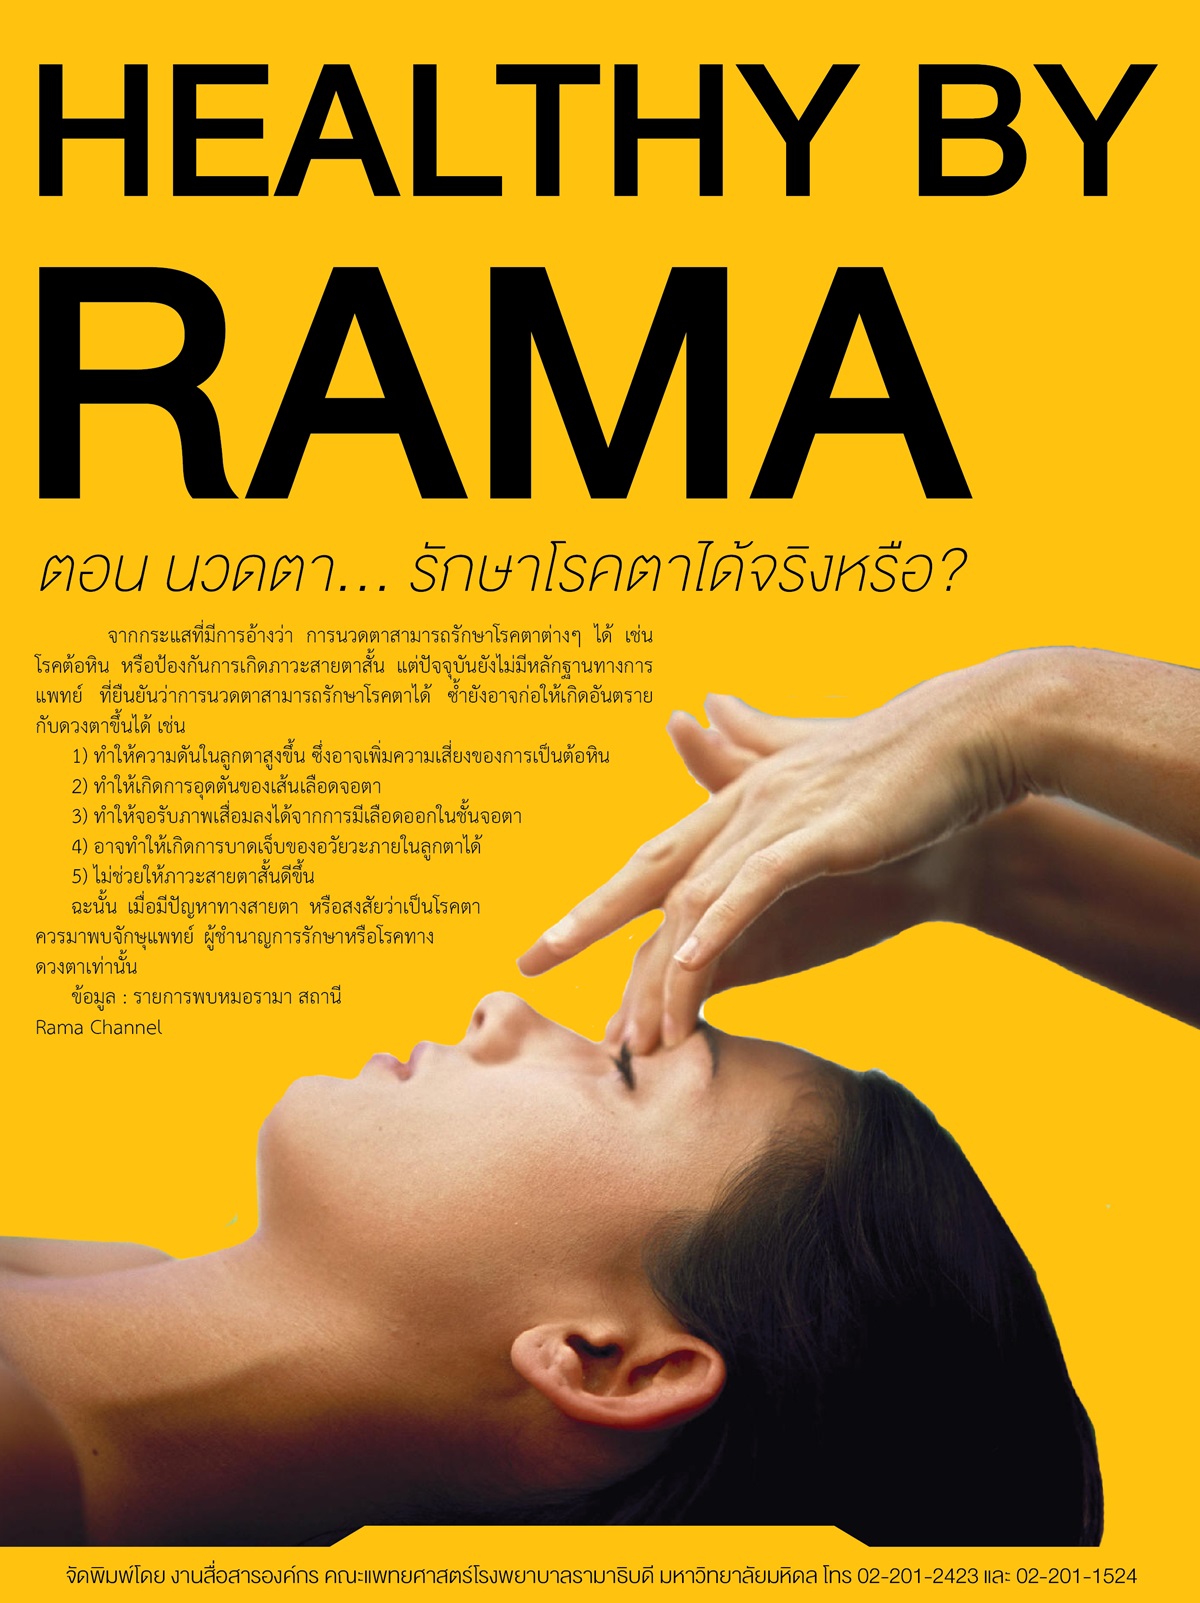 Healthy By Rama ตอน นวดตา... รักษาโรคตาได้จริงหรือ?  